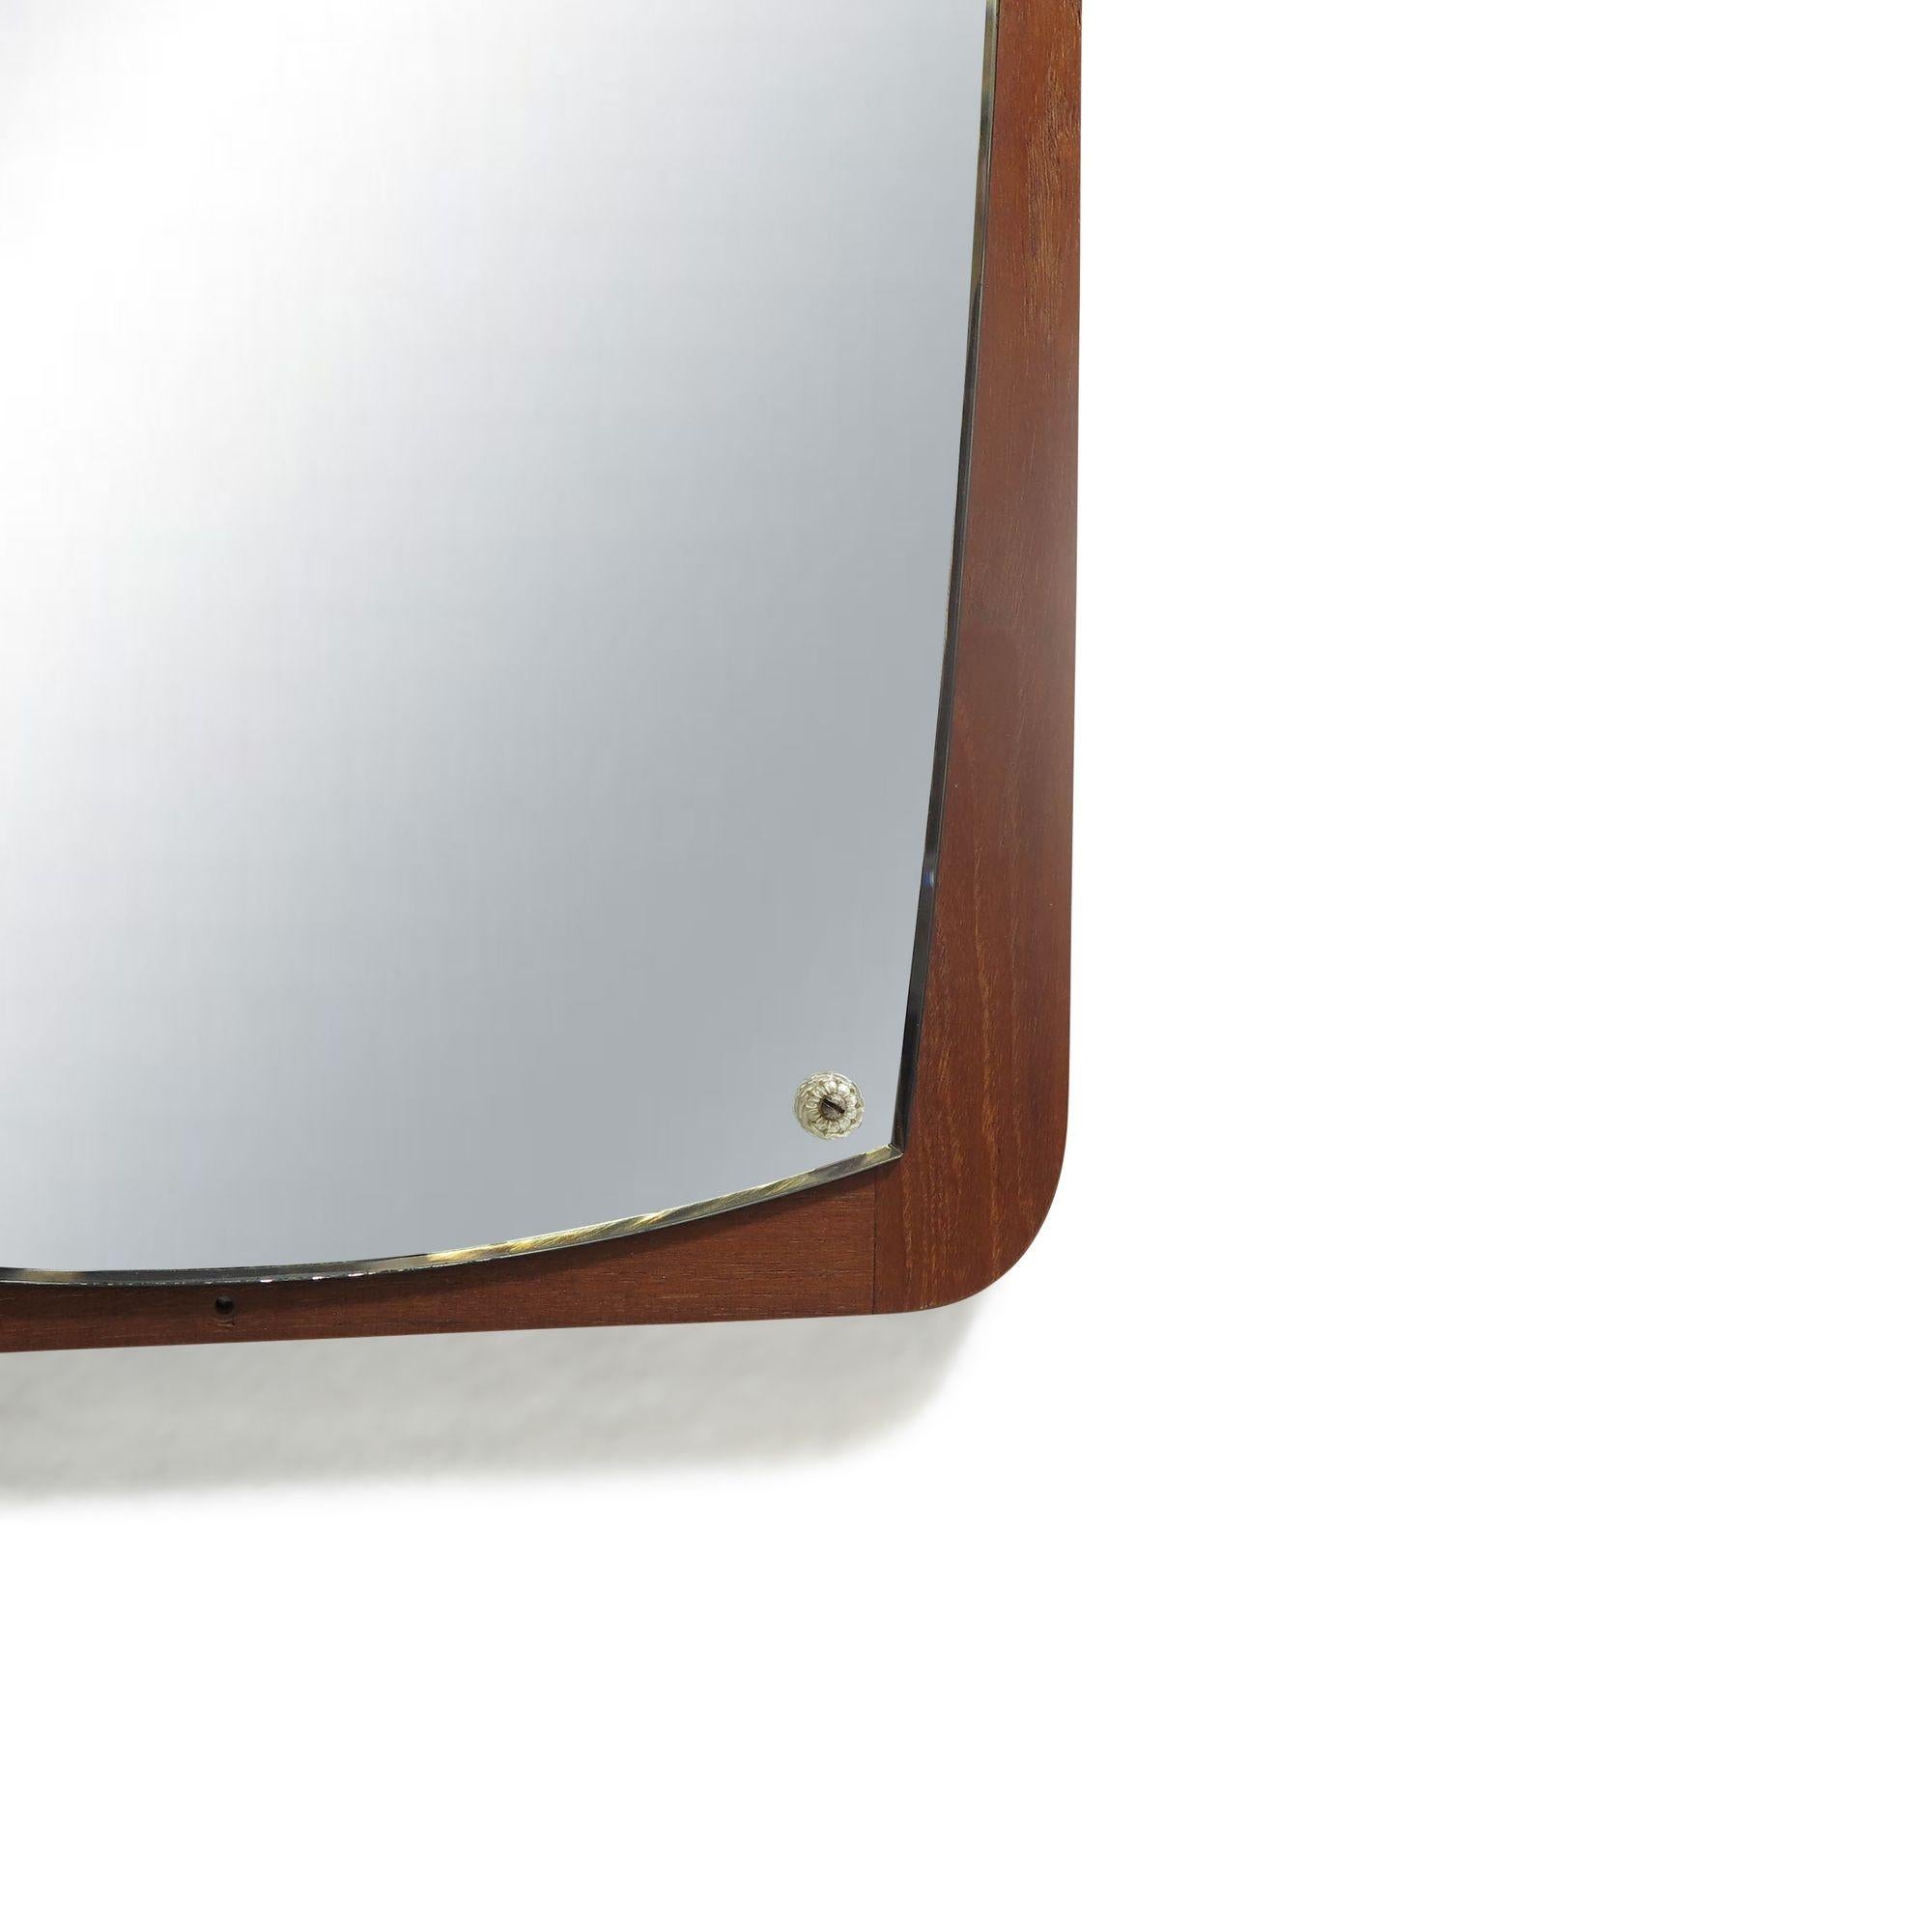 Mid Century Danish teak mirror with polished edge
Measurements
W 15'' x D 0,50'' x H 36,5''